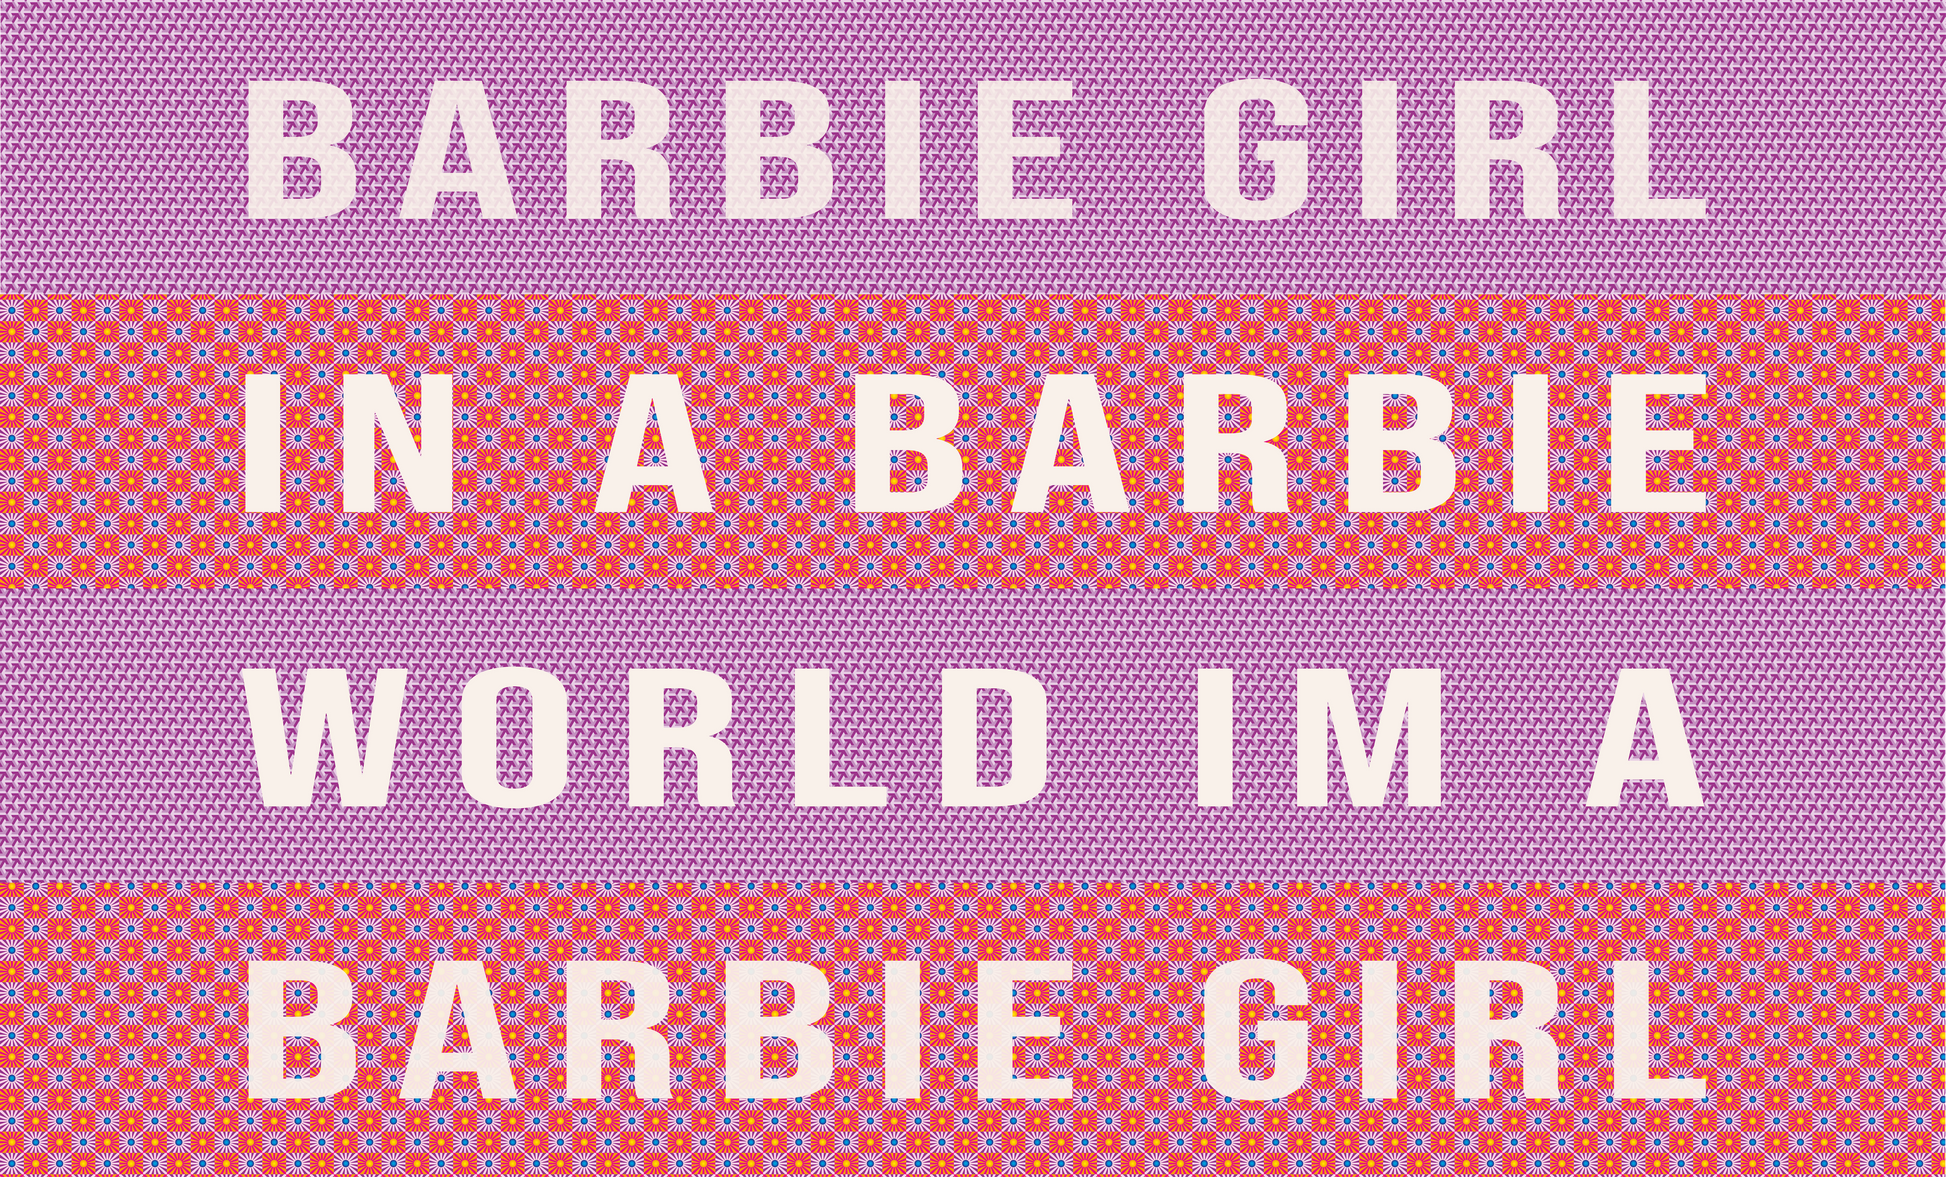 Door Mat 'Barbie Girl in a Barbie World' - Posterify